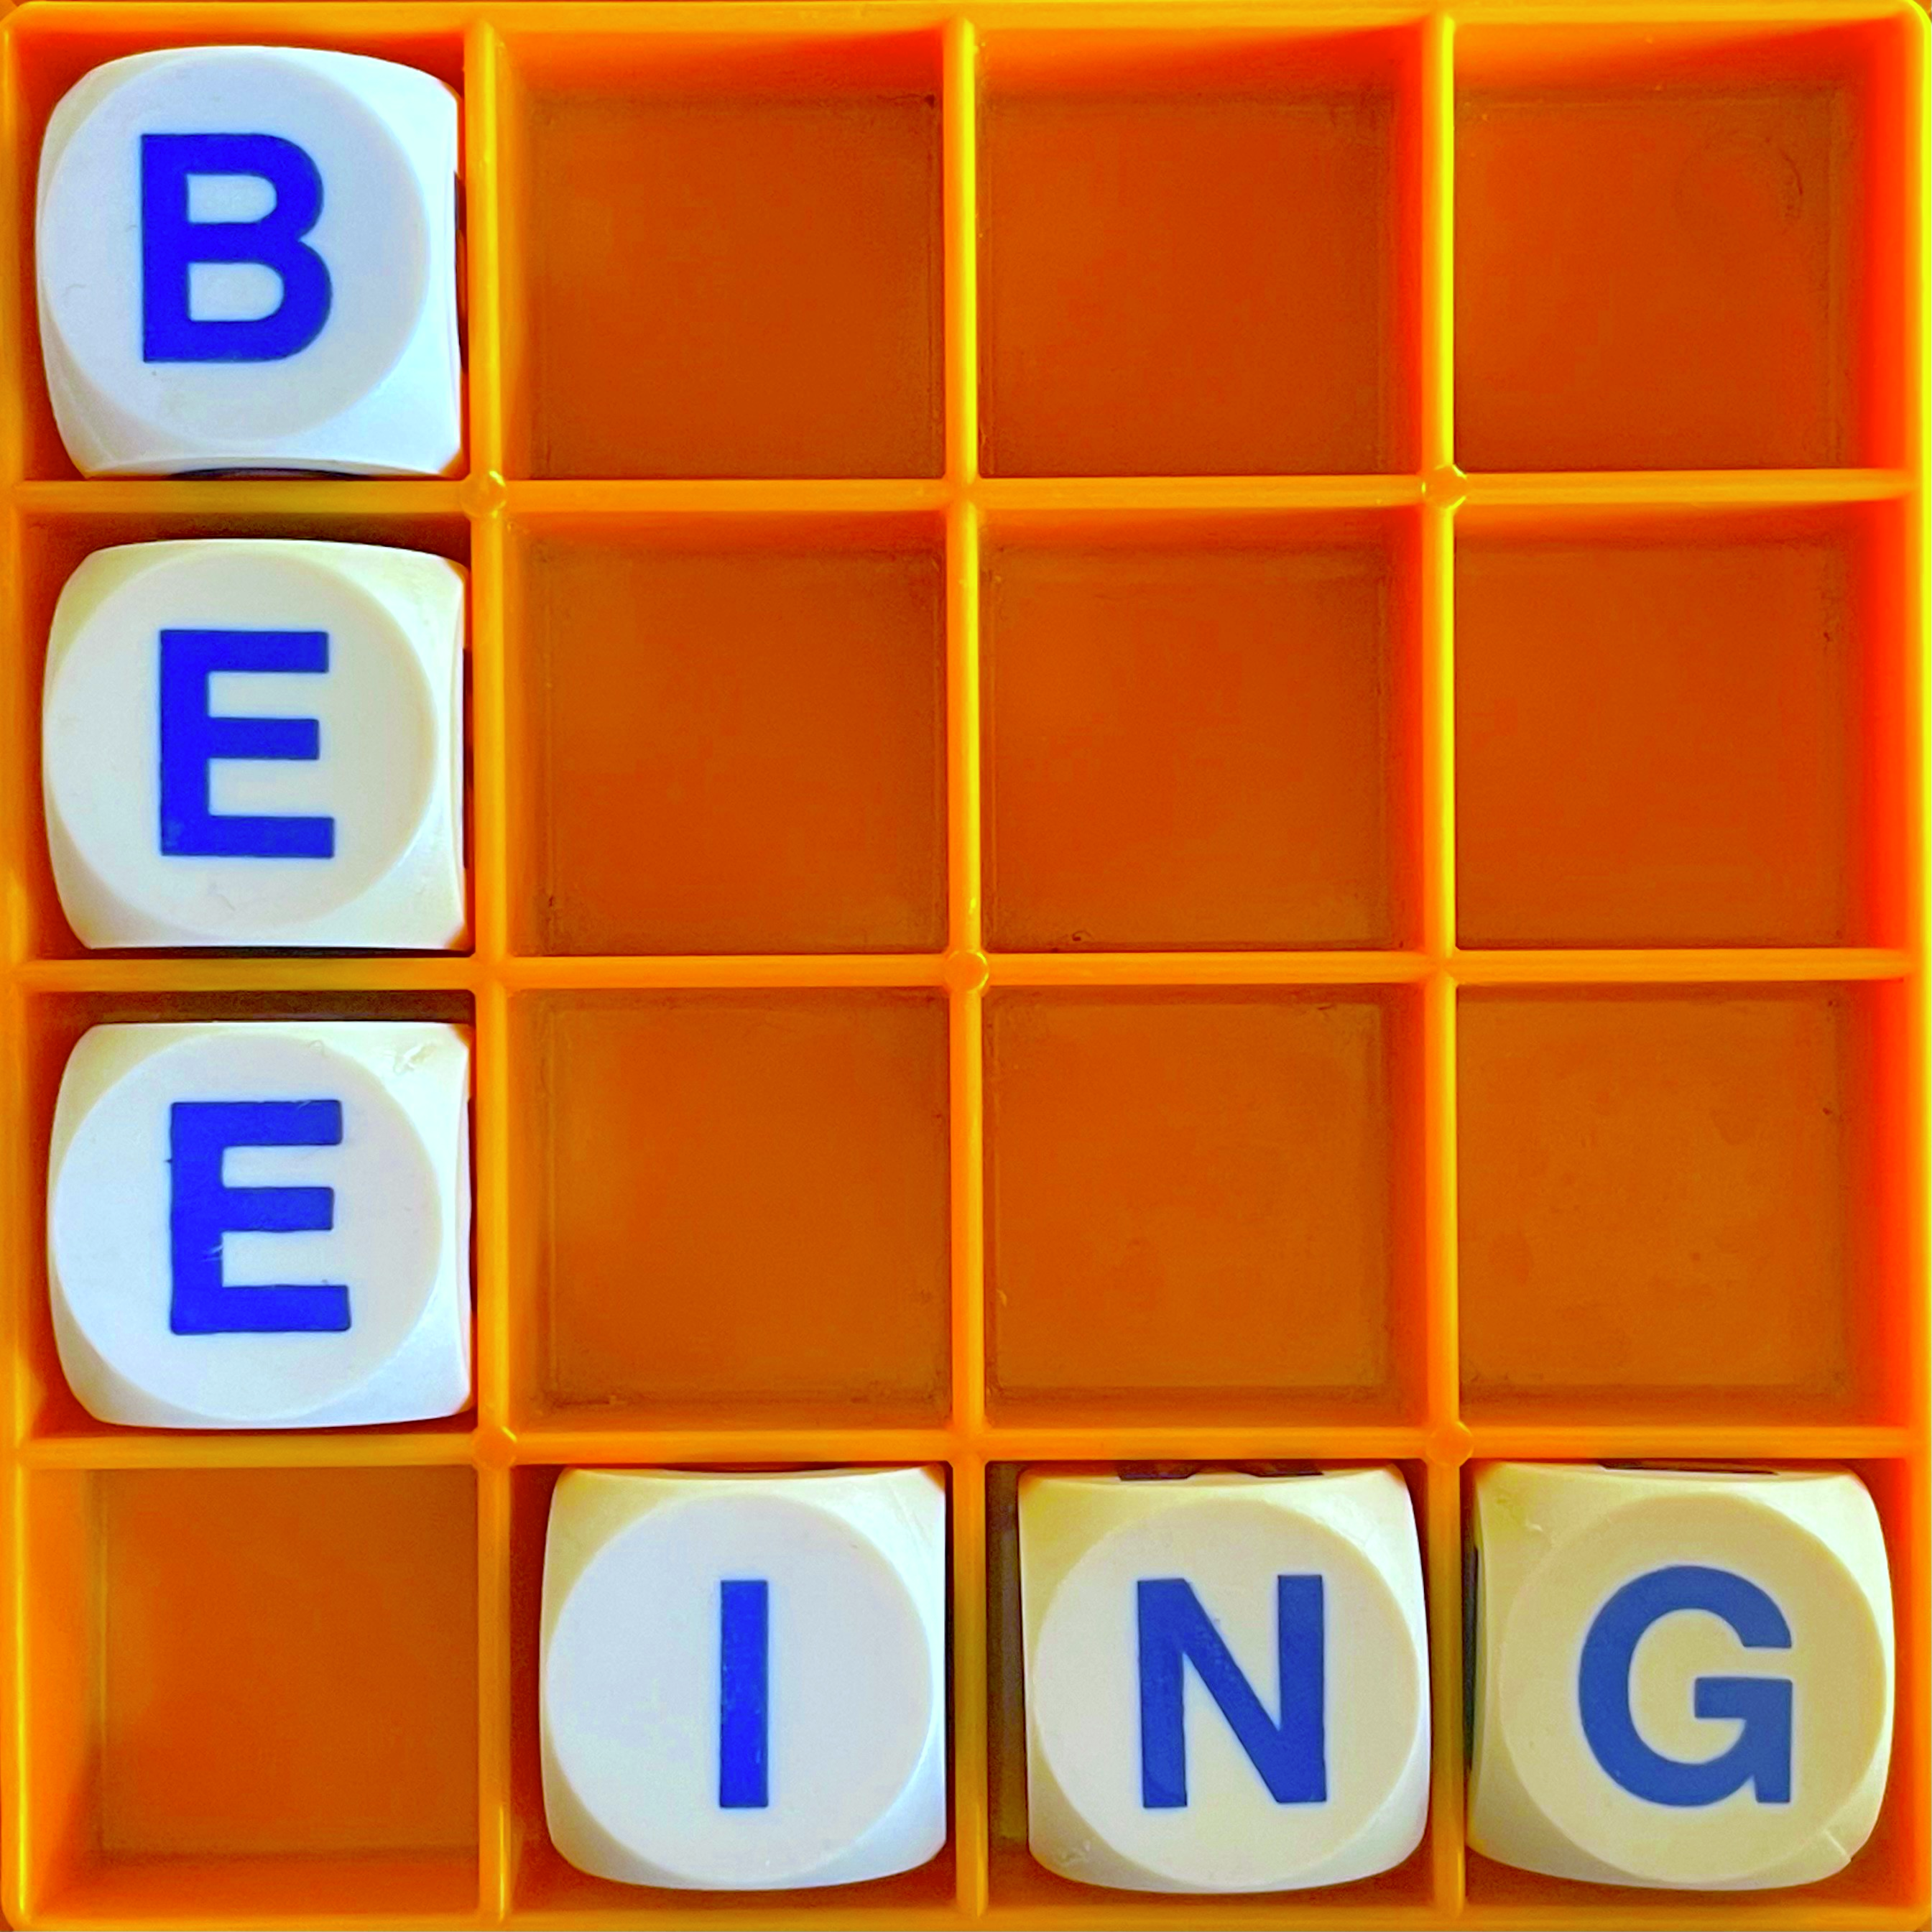 196. Word Play 6: Beeing